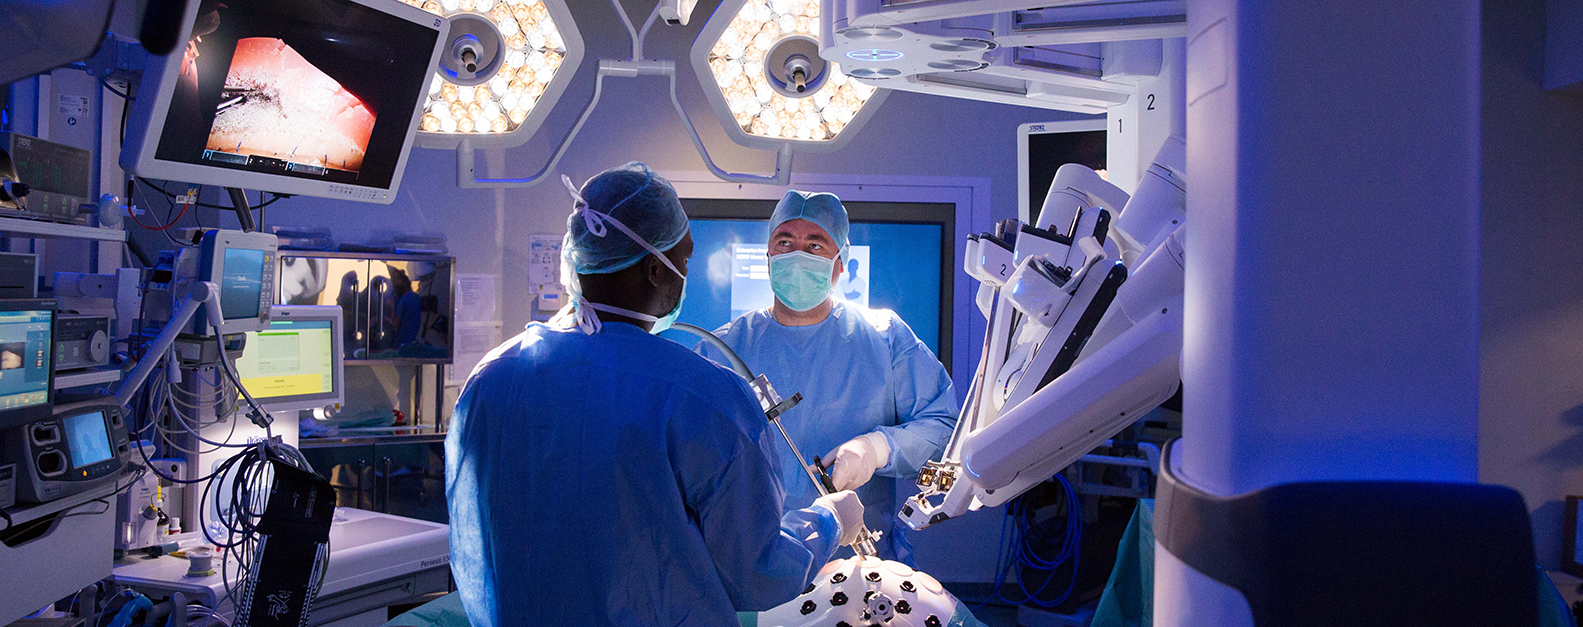 intervento laser prostata video